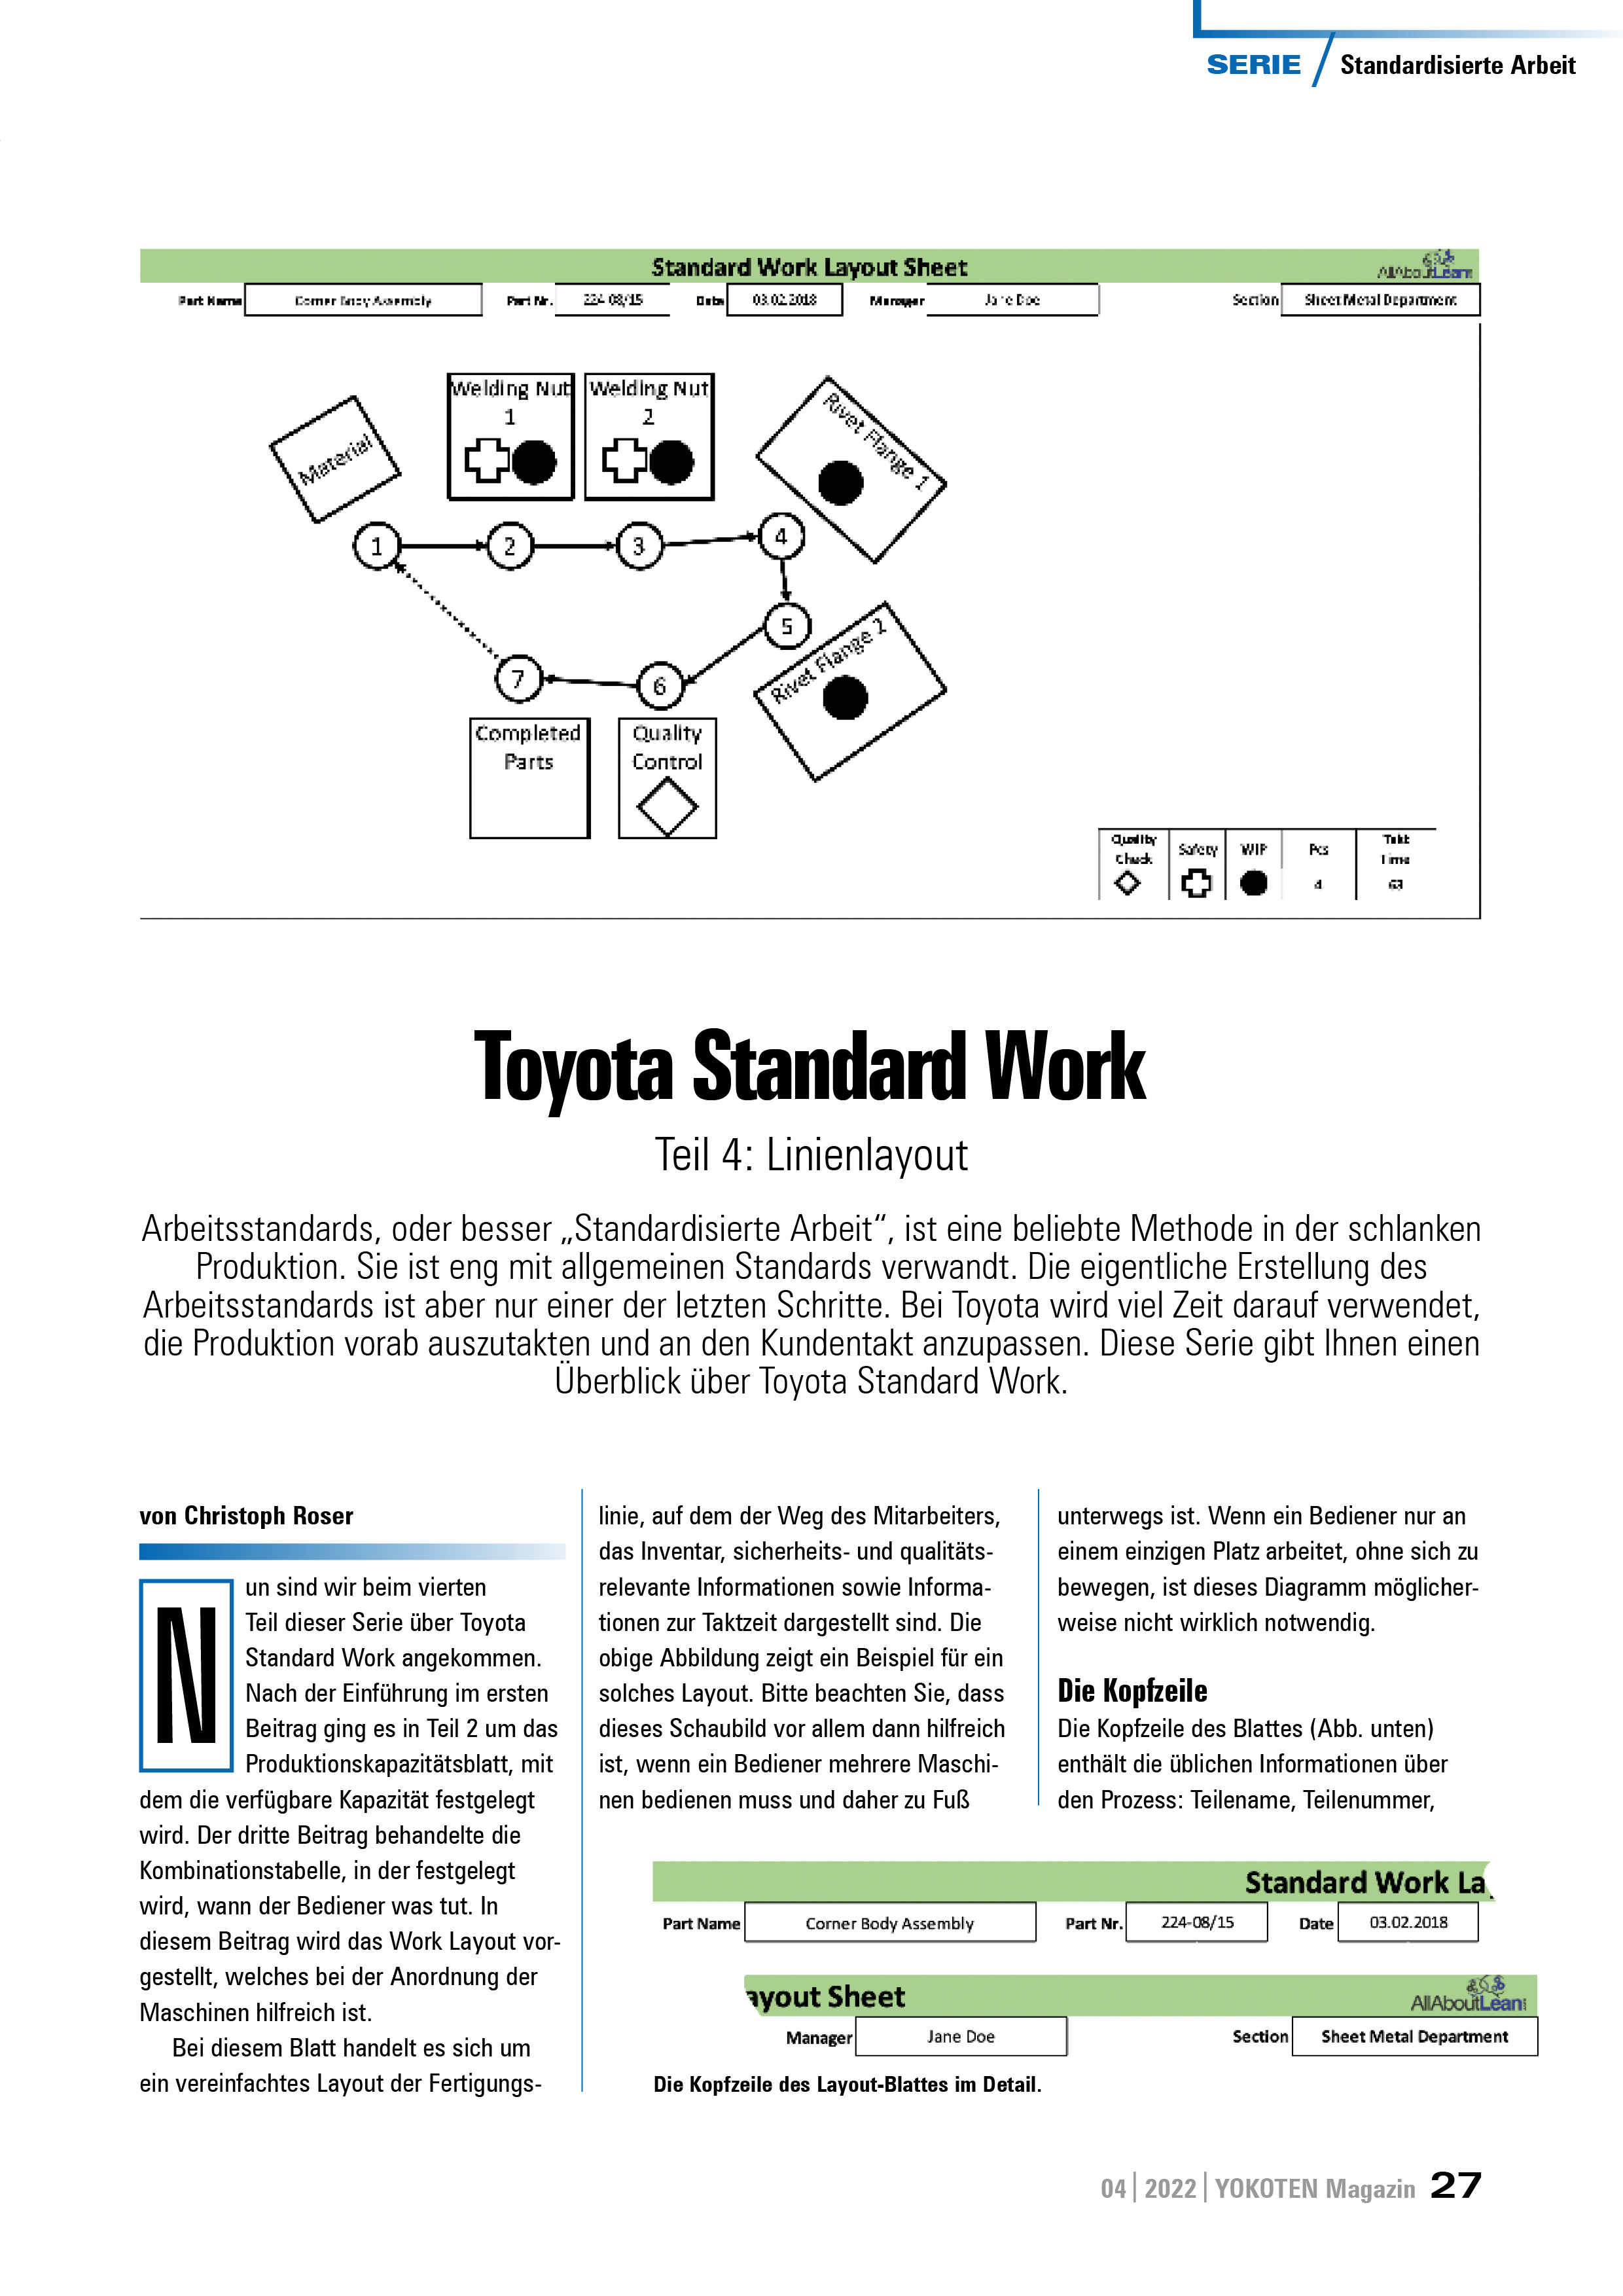 YOKOTEN-Artikel: Toyota Standard Work - Teil 4